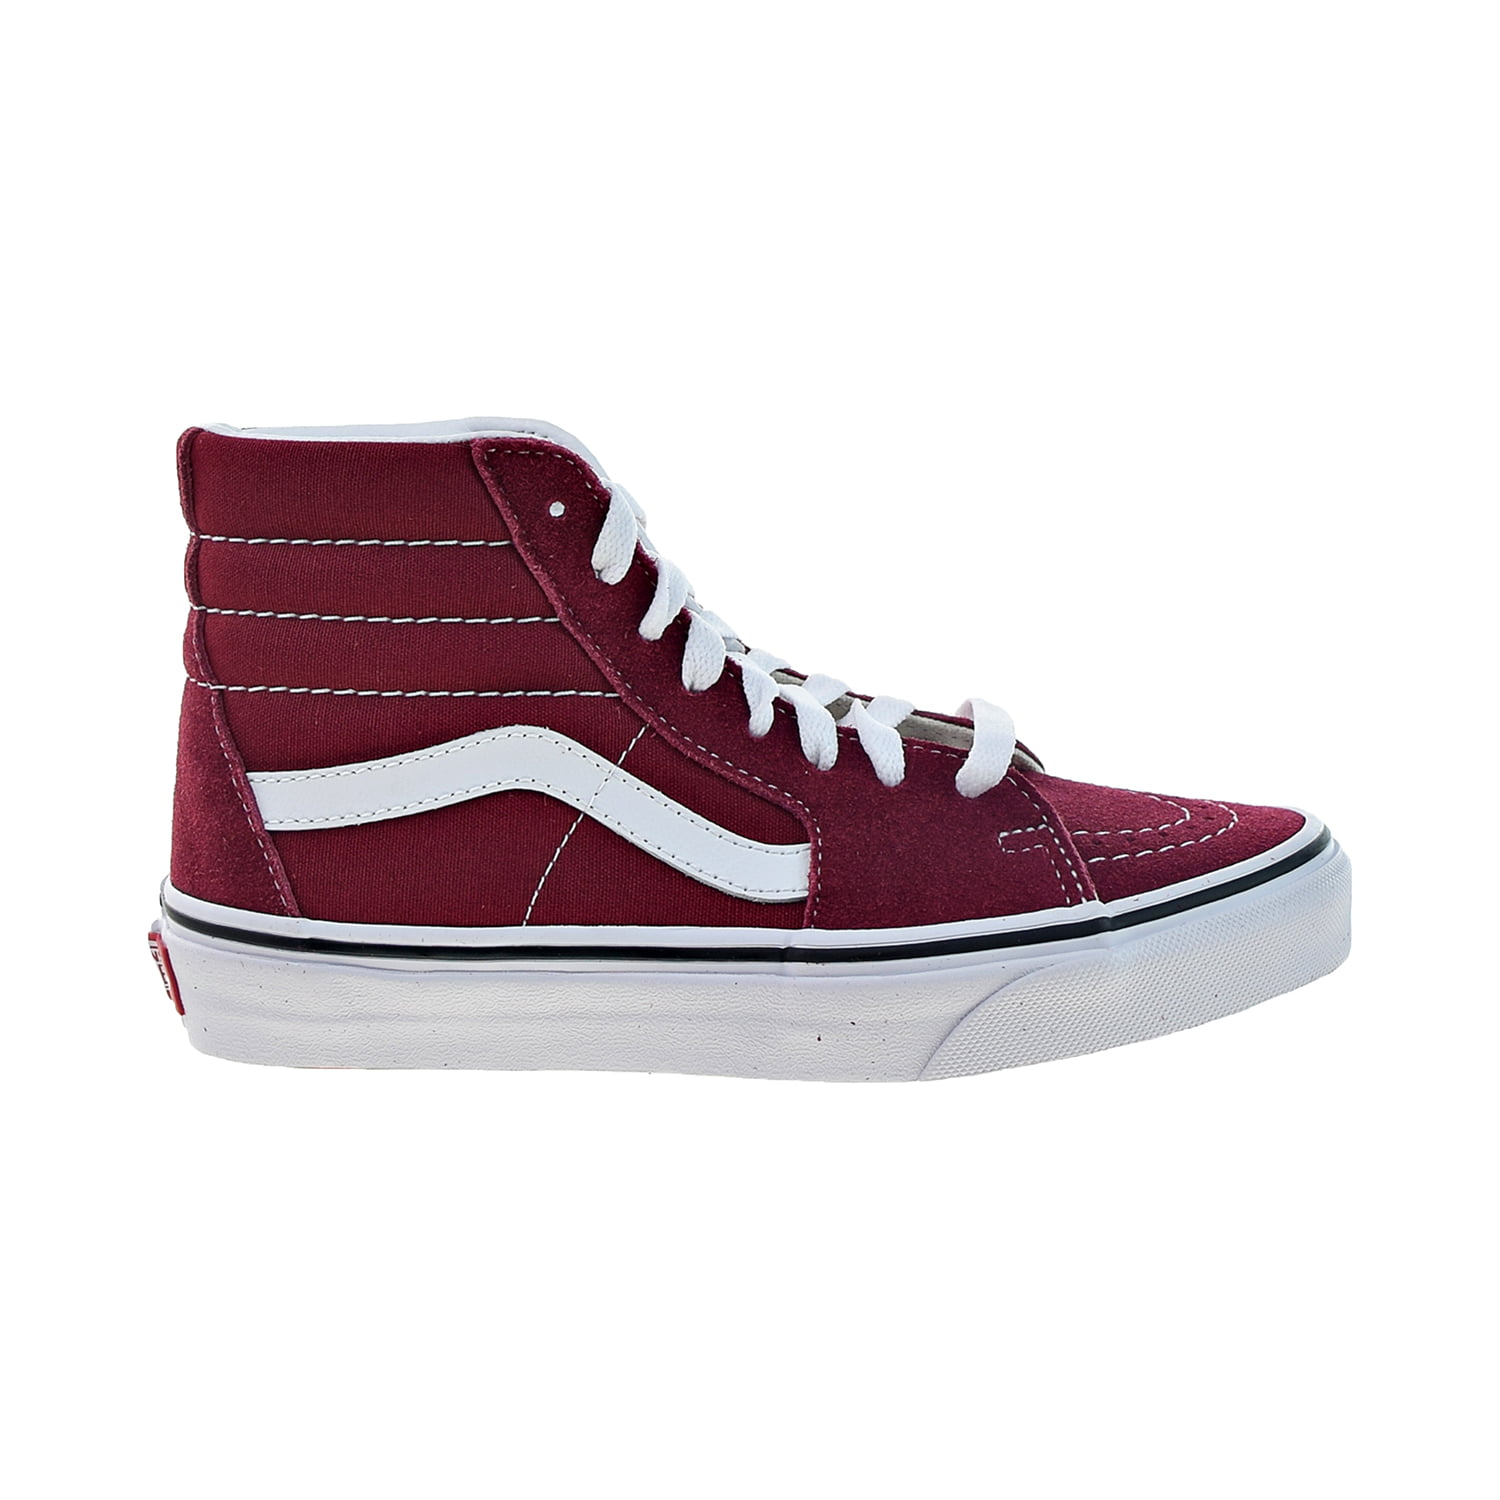 Vans Sk8-Hi Men's Shoes Rumba Red-True White vn0a38ge-vg4 - Walmart.com